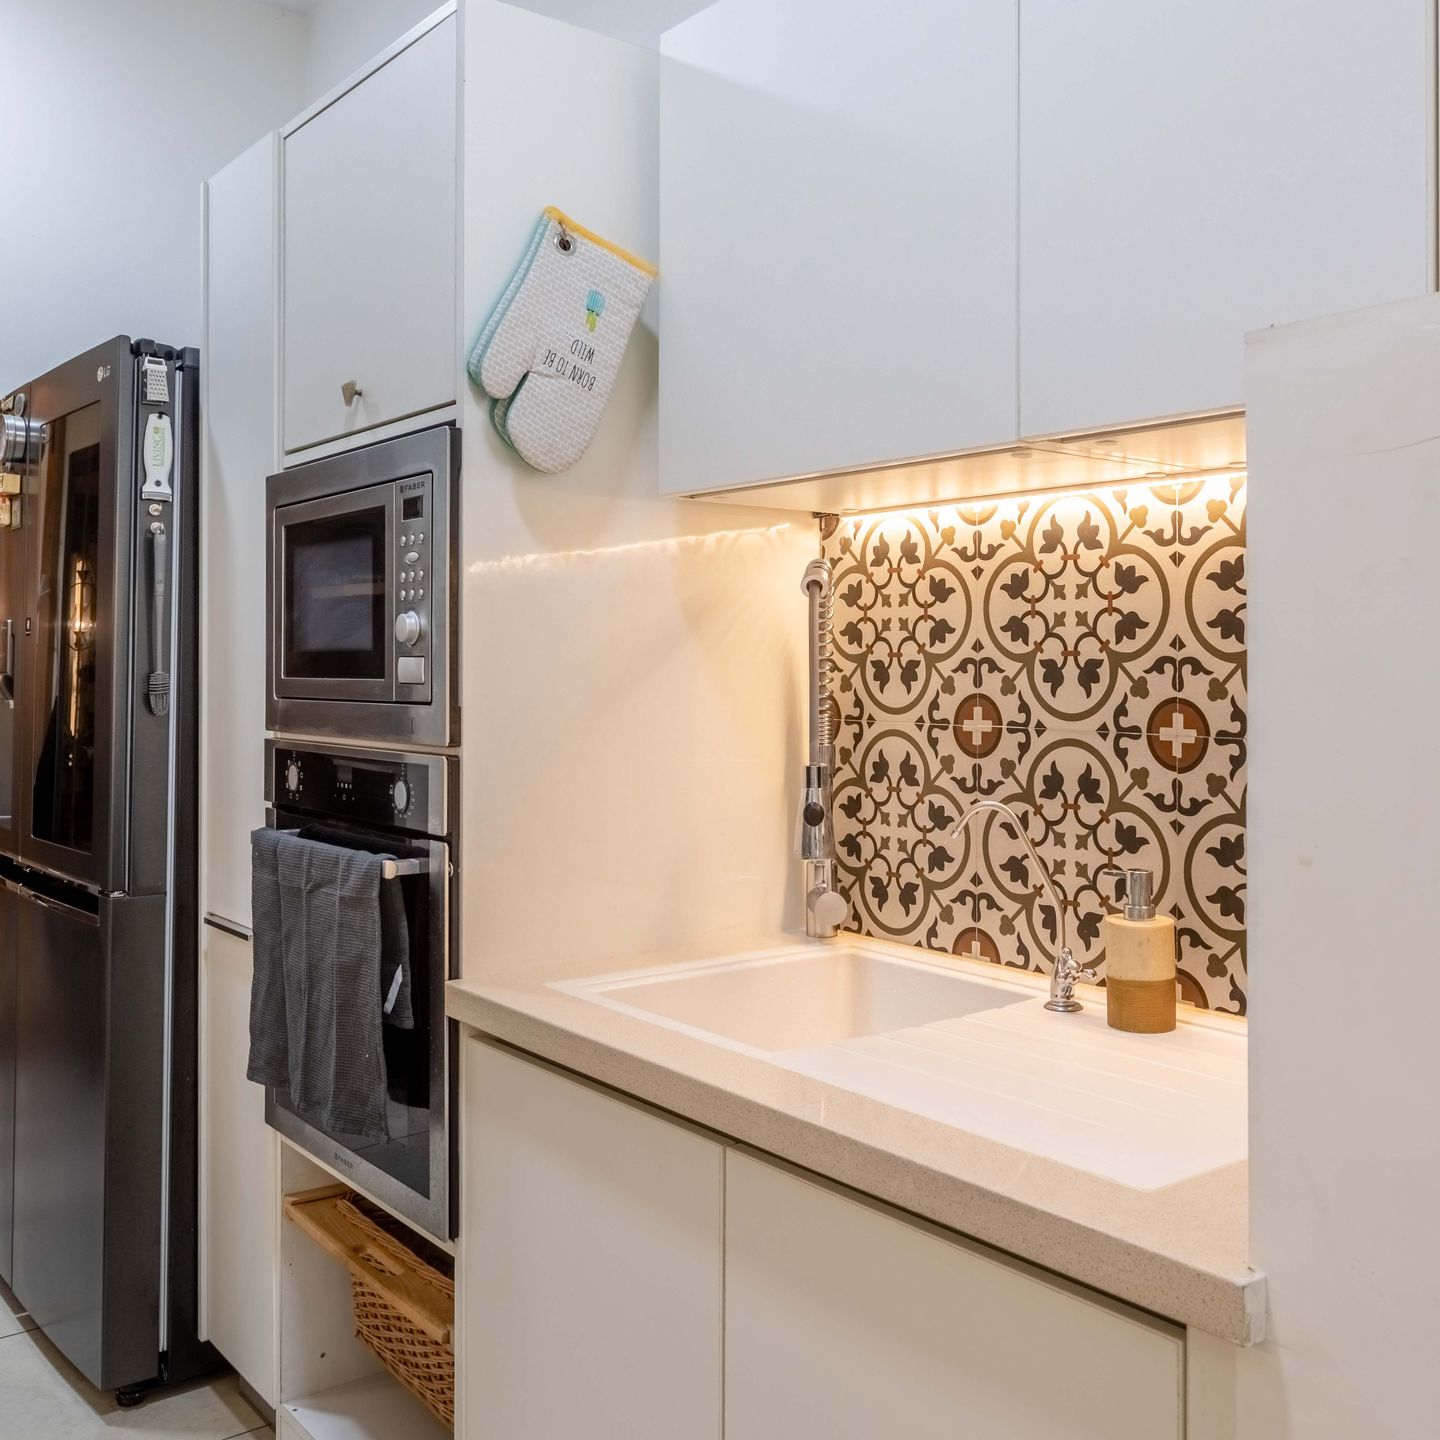 Frosty White Modular Parallel Kitchen Design With Patterned Backsplash - Livspace